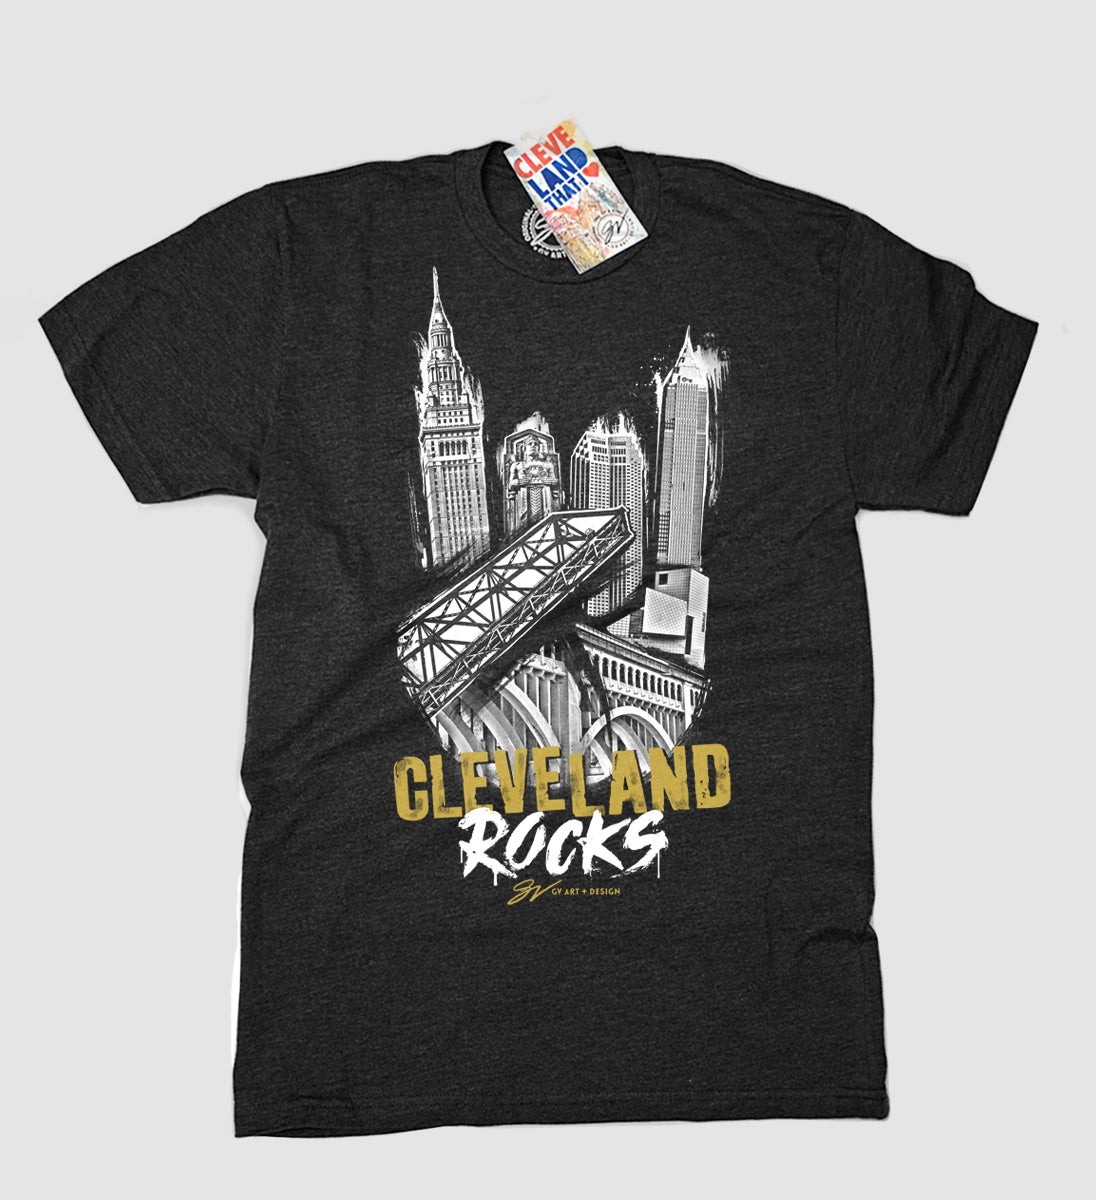 "Cleveland Rocks" Landmarks T shirt